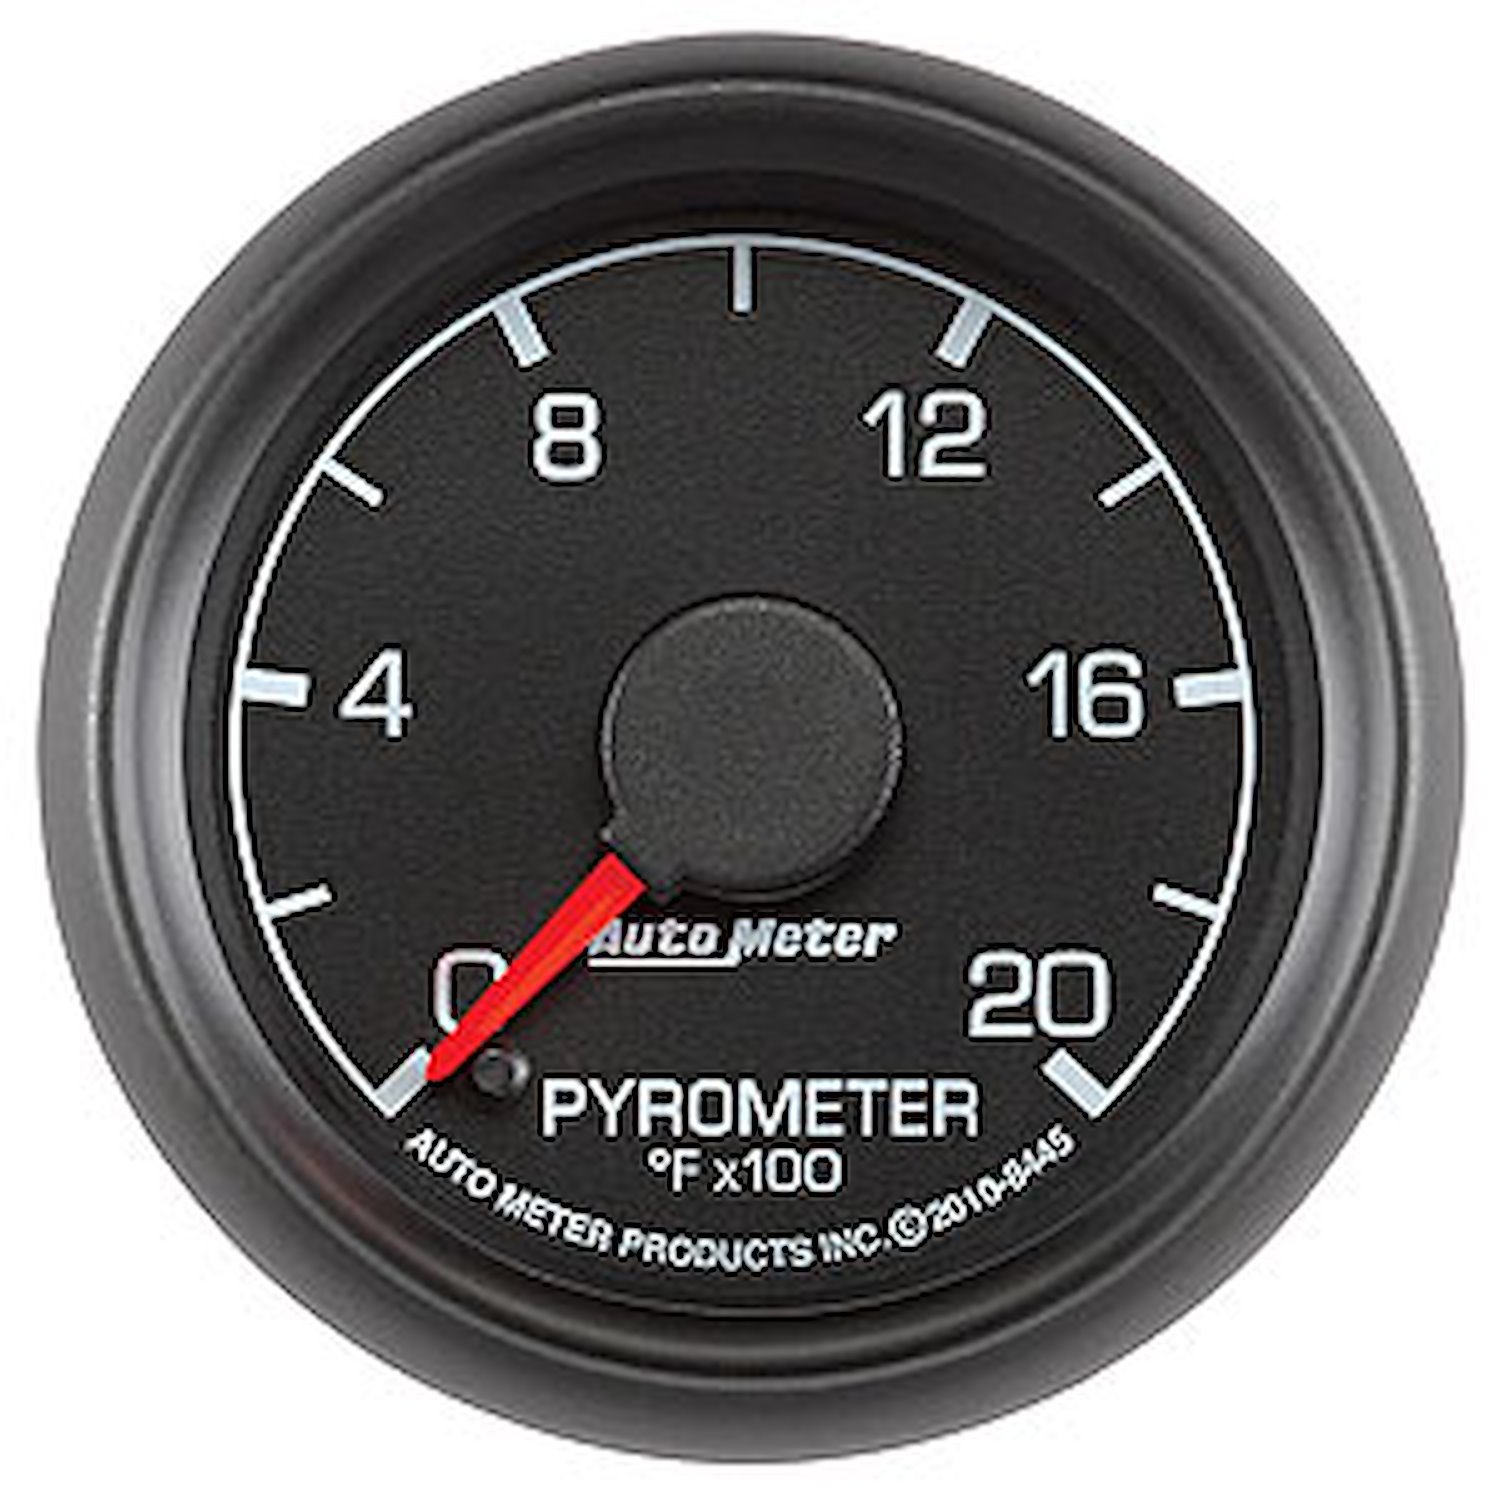 Factory Match 2-1/16" Pyrometer 0°-2000° F (FSE)